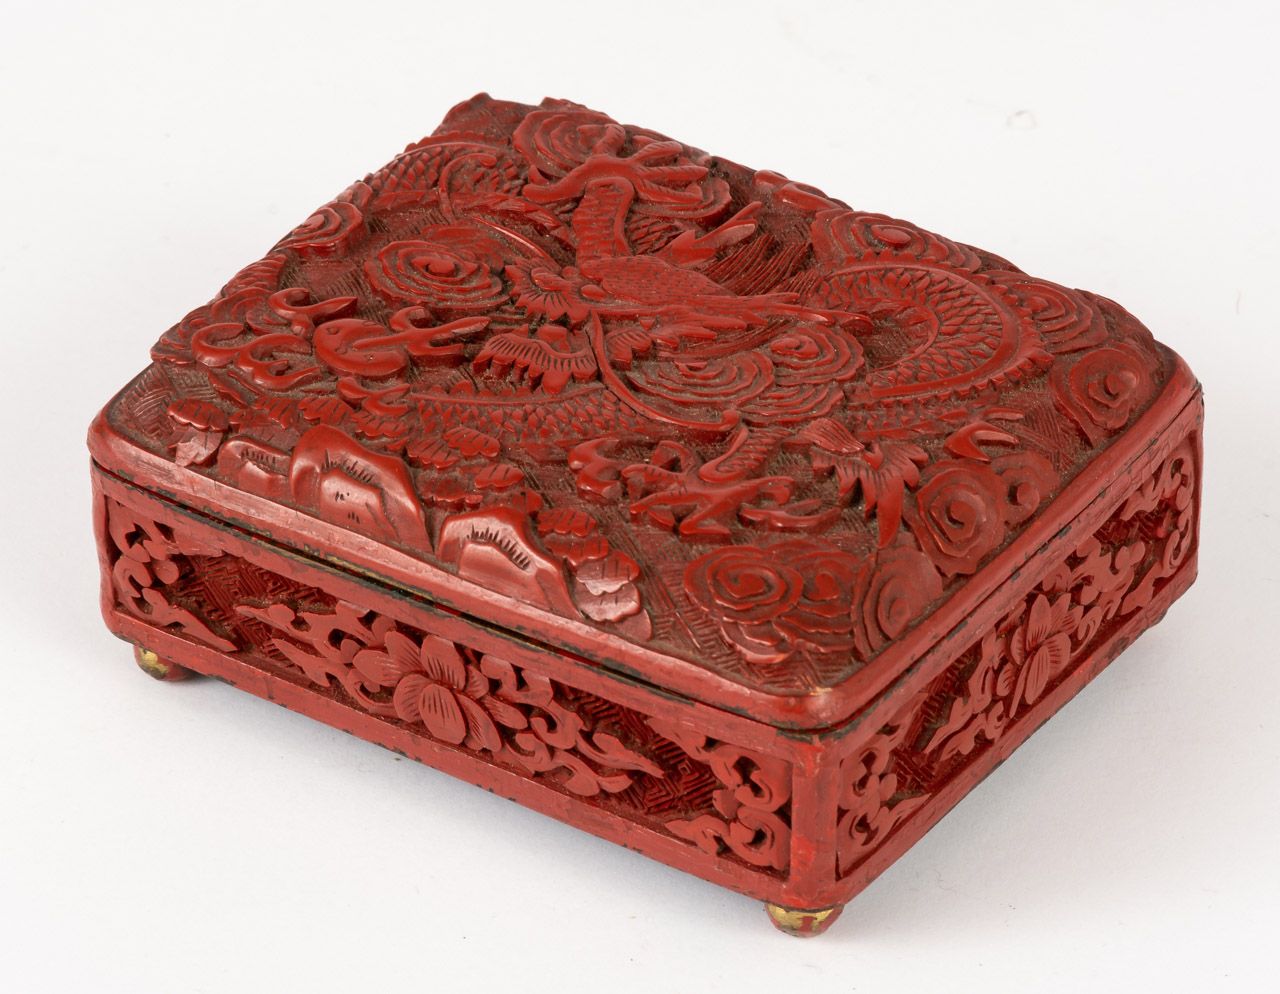 ROTE SCHNITZLACKDOSE 中国，漆器，木材，雕刻，大概19世纪。

10 x 8 x 4厘米